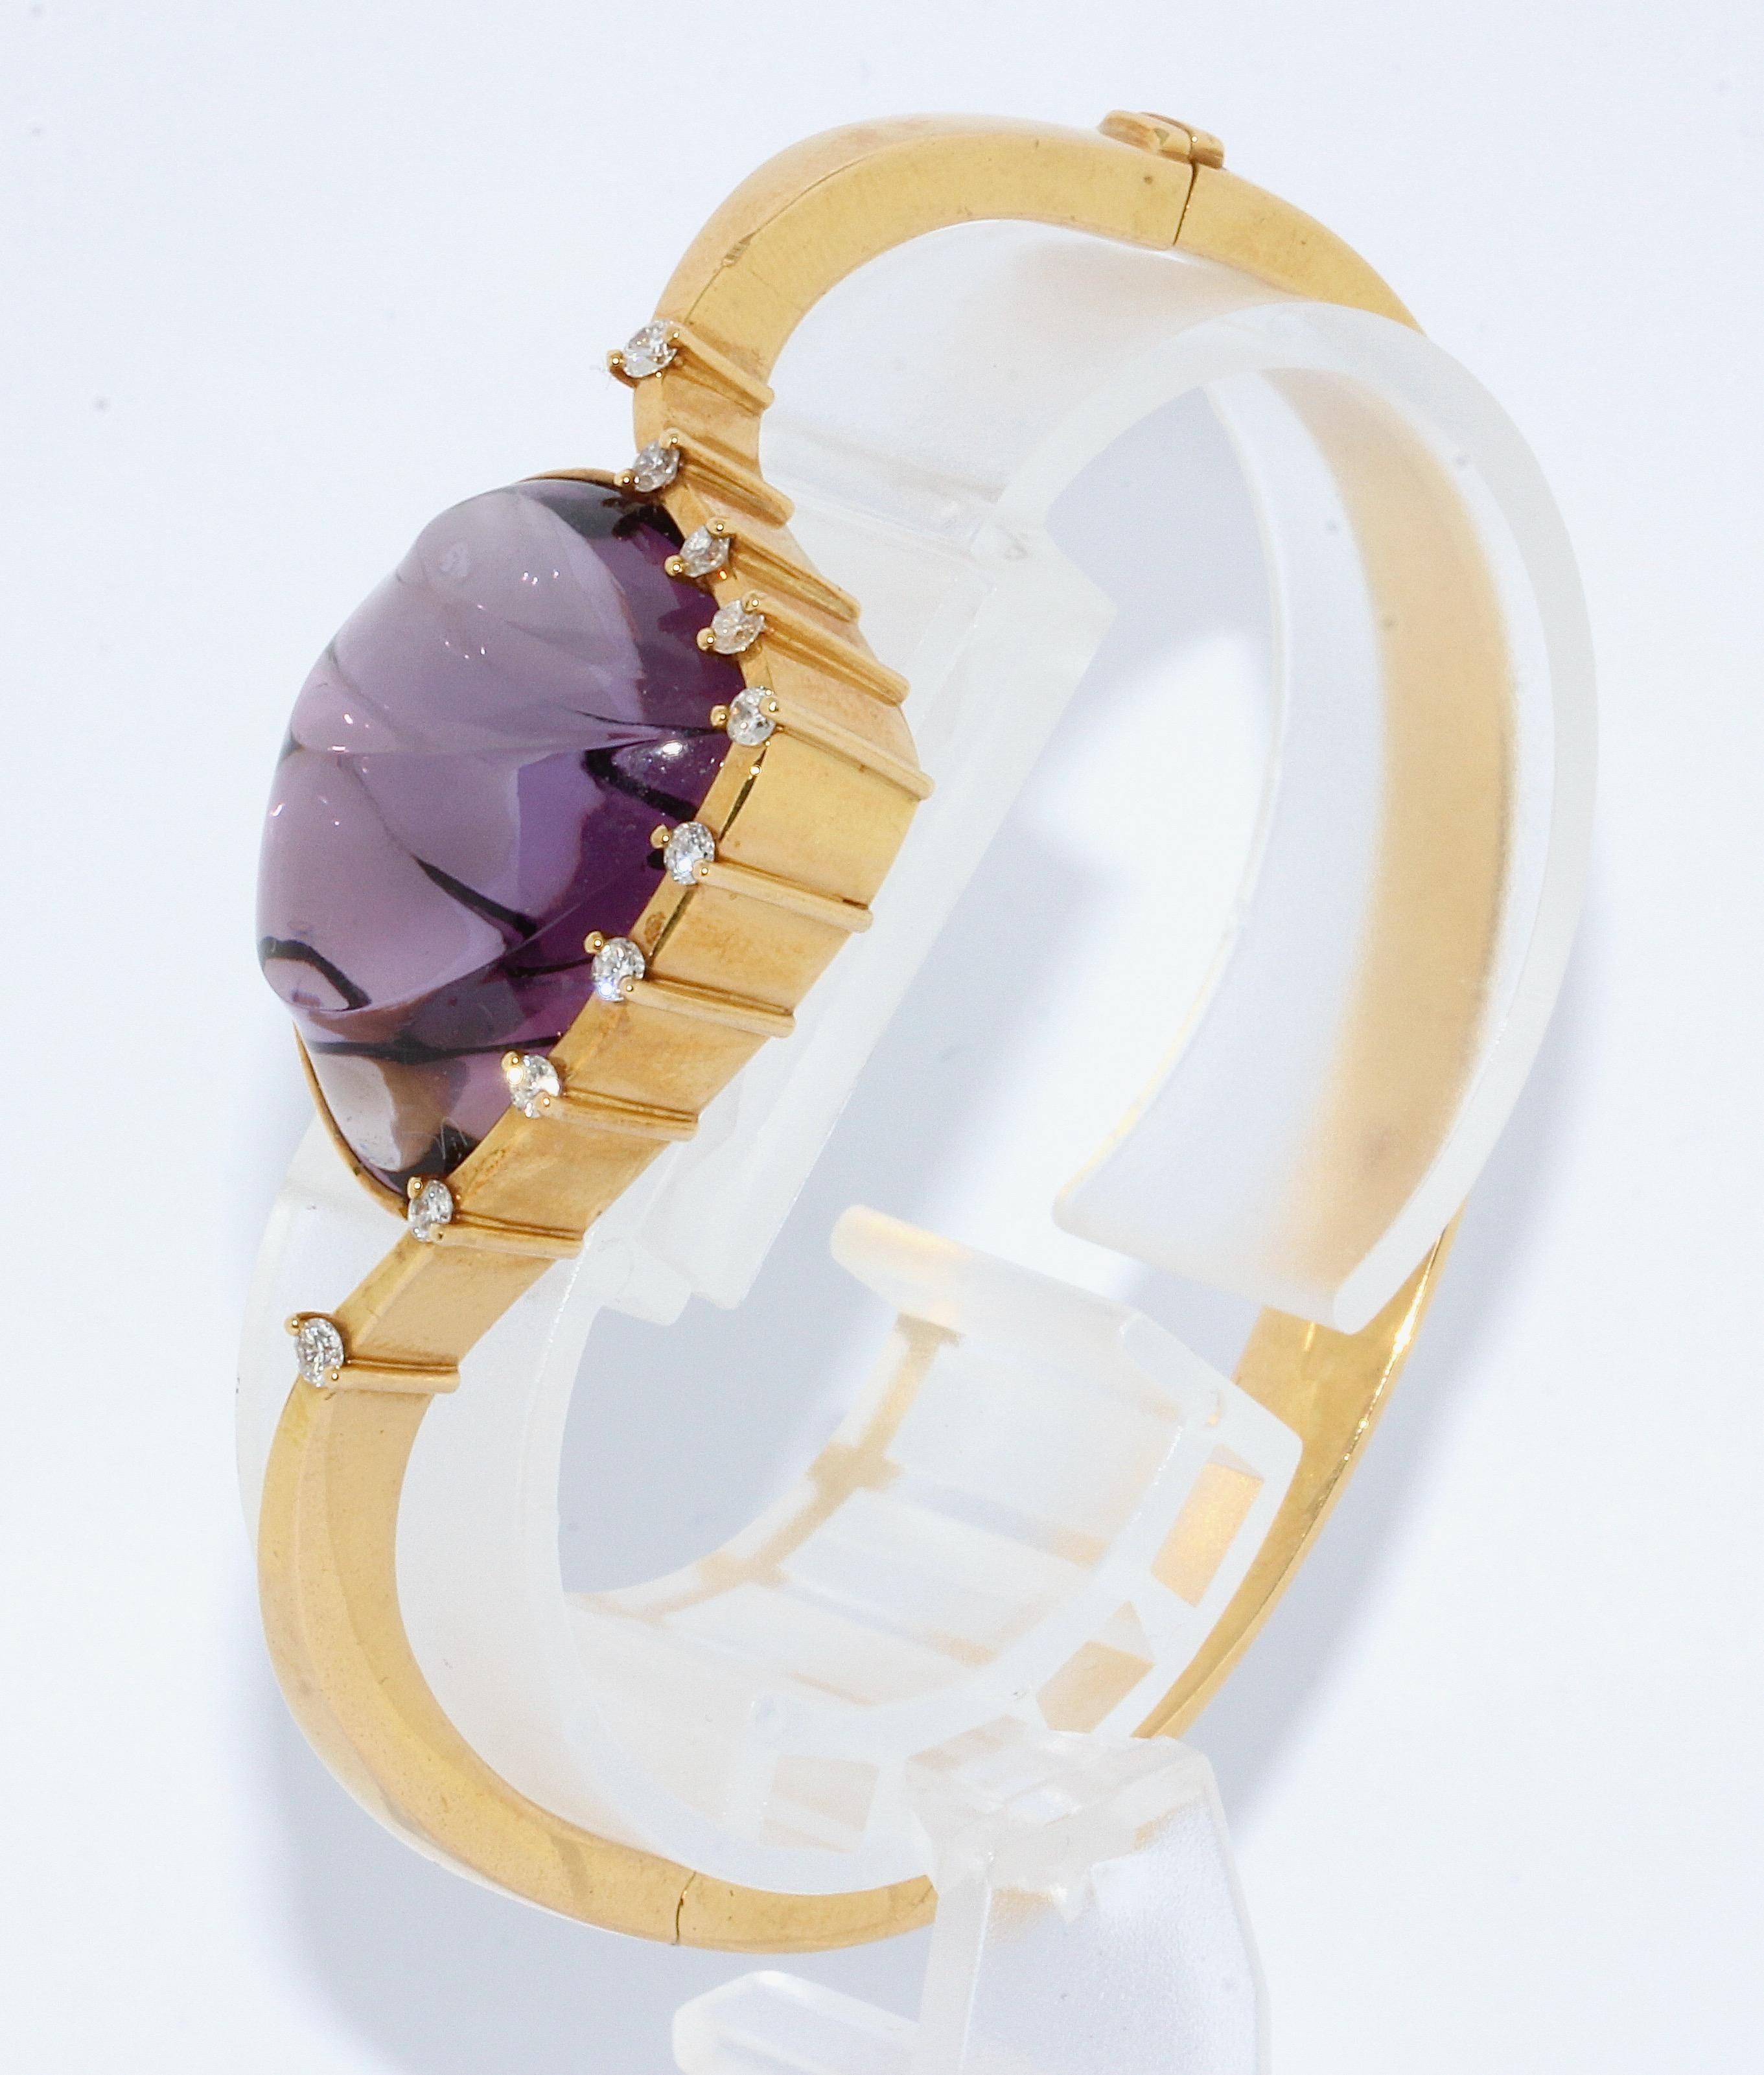 Round Cut 18 Karat Gold Bangle, Bracelet, Set with Large Amethyst and Diamonds. Cadeaux. For Sale